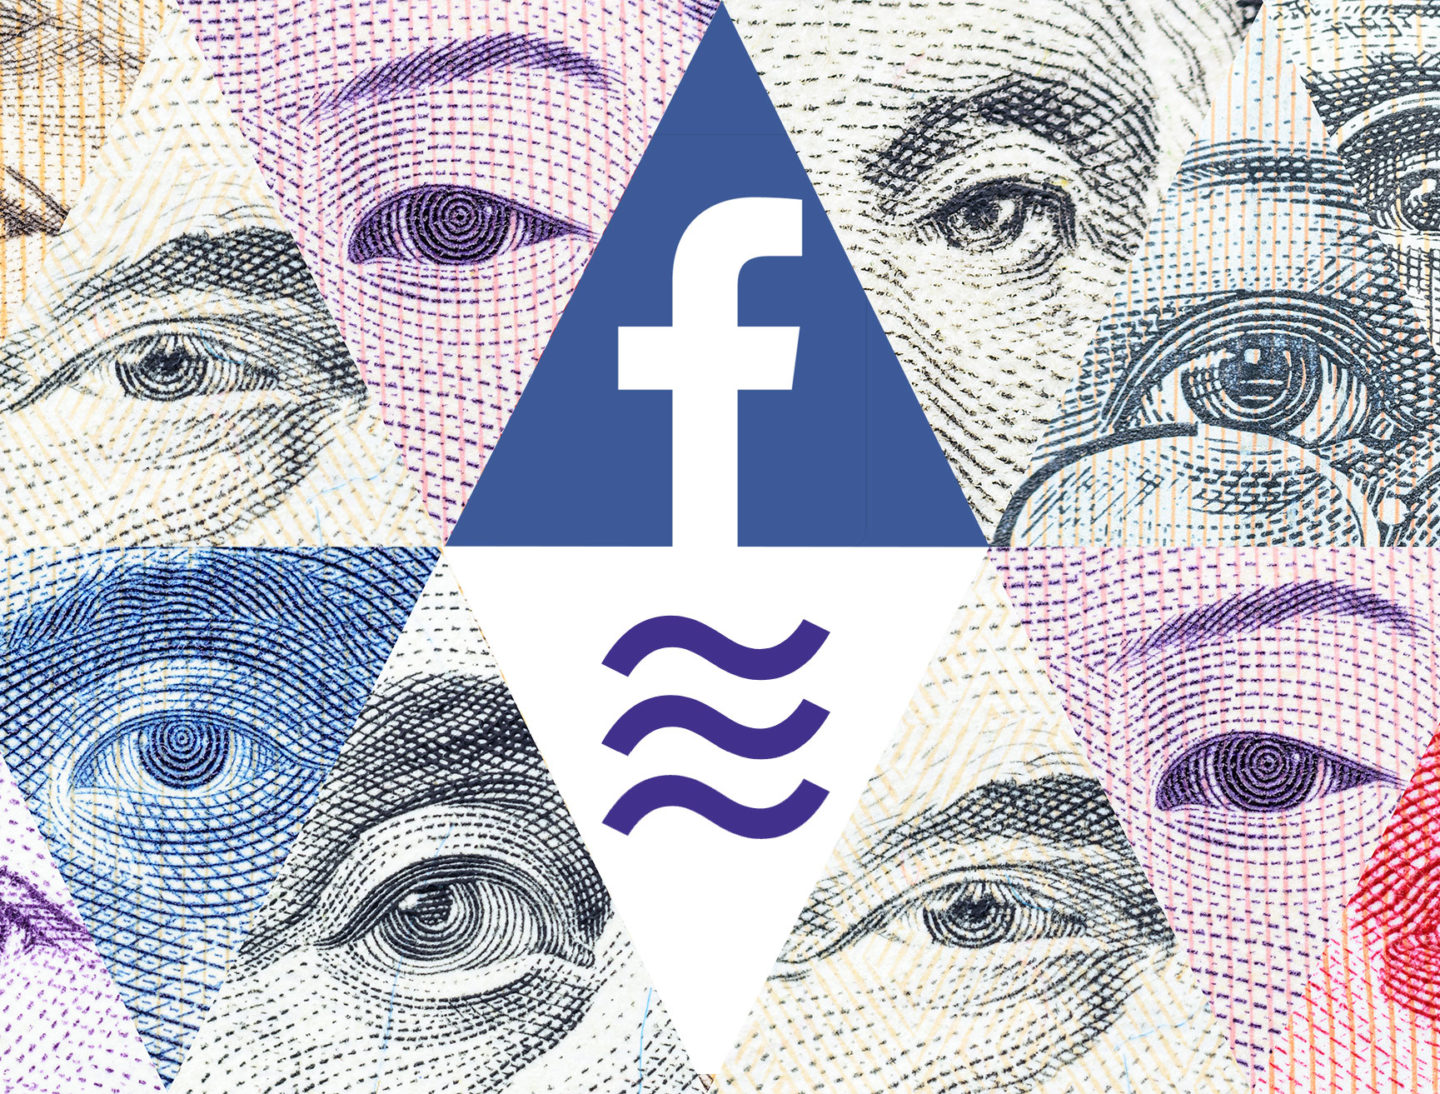 Facebook 揭露 Libra 一籃子貨幣的細節